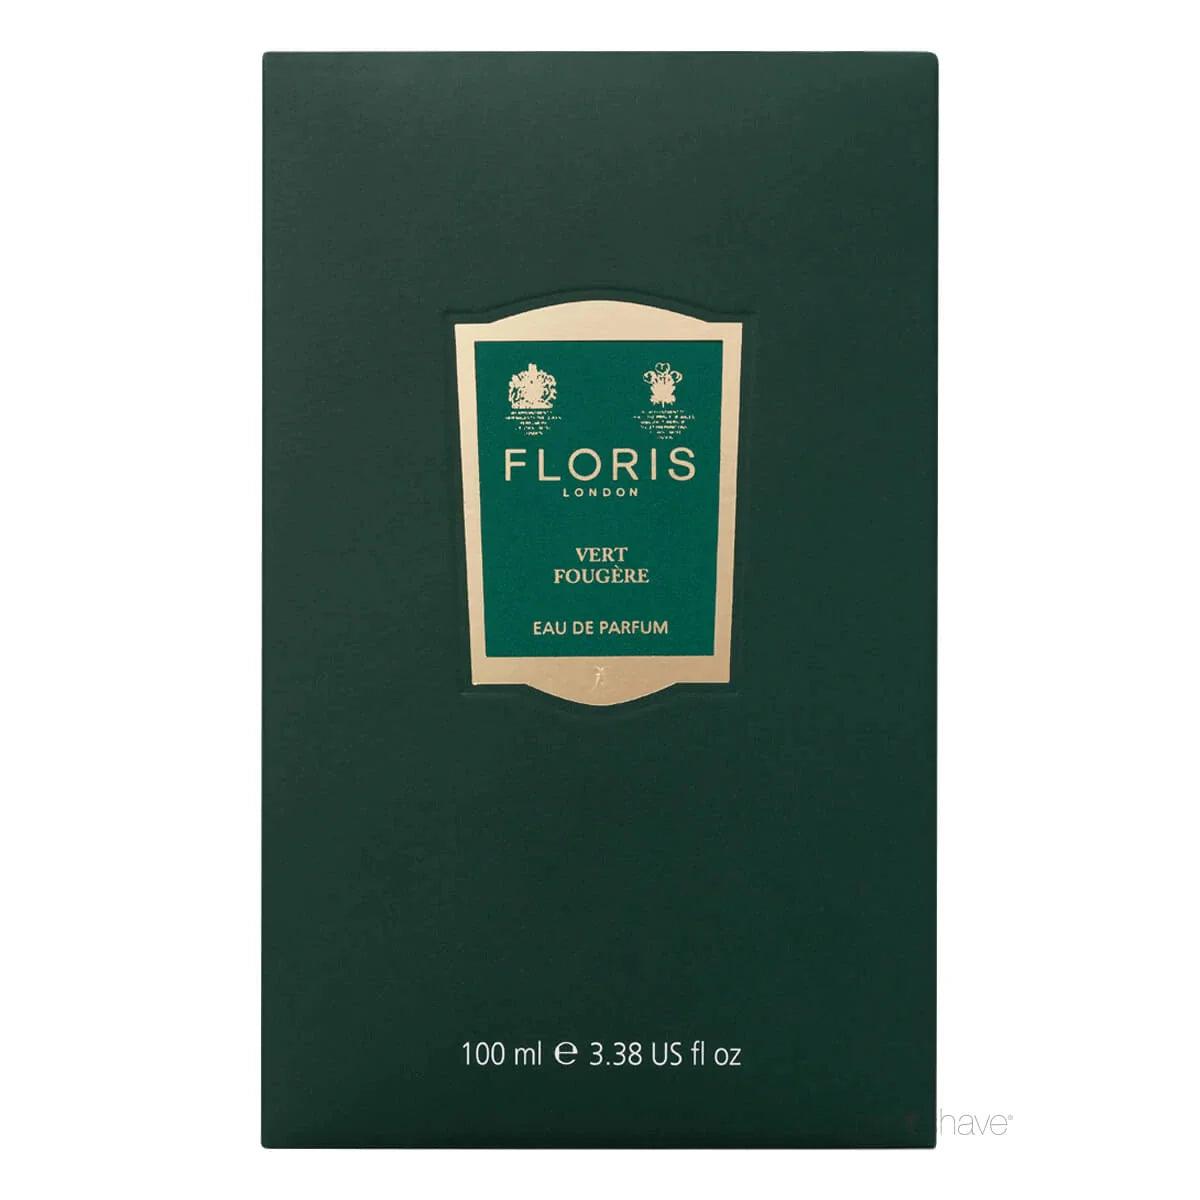 Floris Vert Fougere, Eau de Parfum, 2 ml | Parfyme | Floris London | JK SHOP | JK Barber og herre frisør | Lavepriser | Best